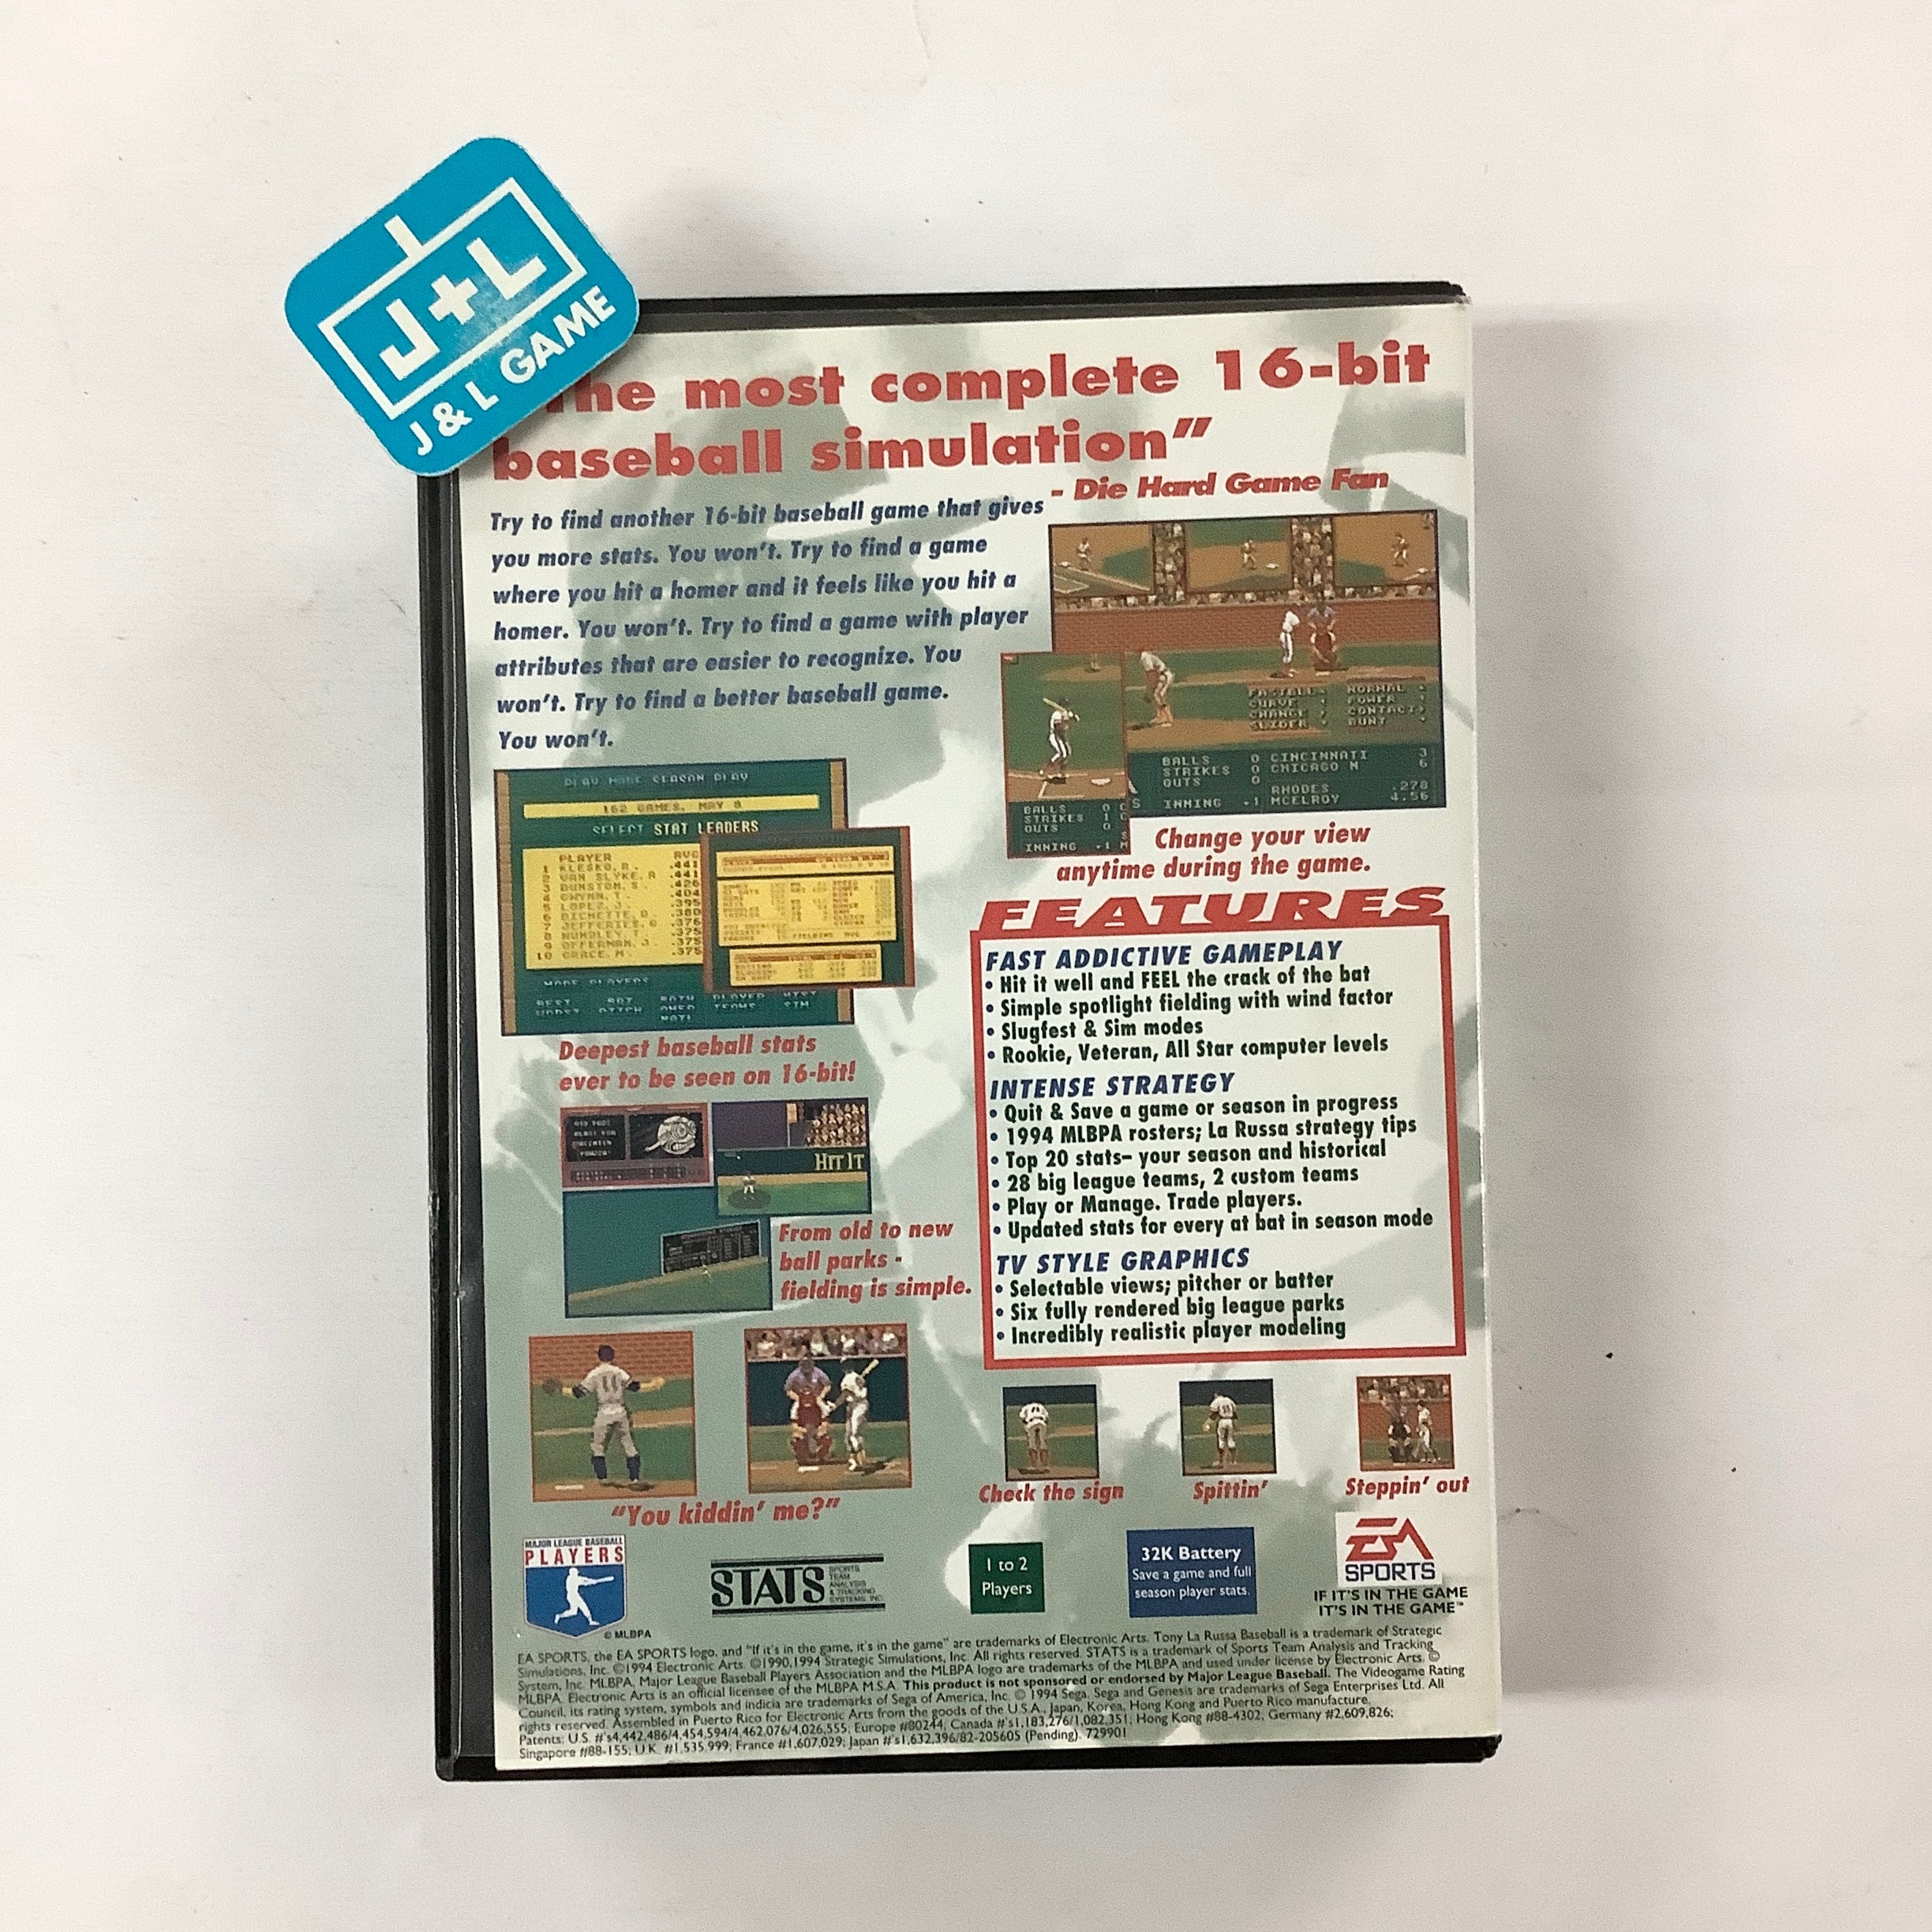 La Russa Baseball 95 - (SG) SEGA Genesis [Pre-Owned] Video Games EA Sports   